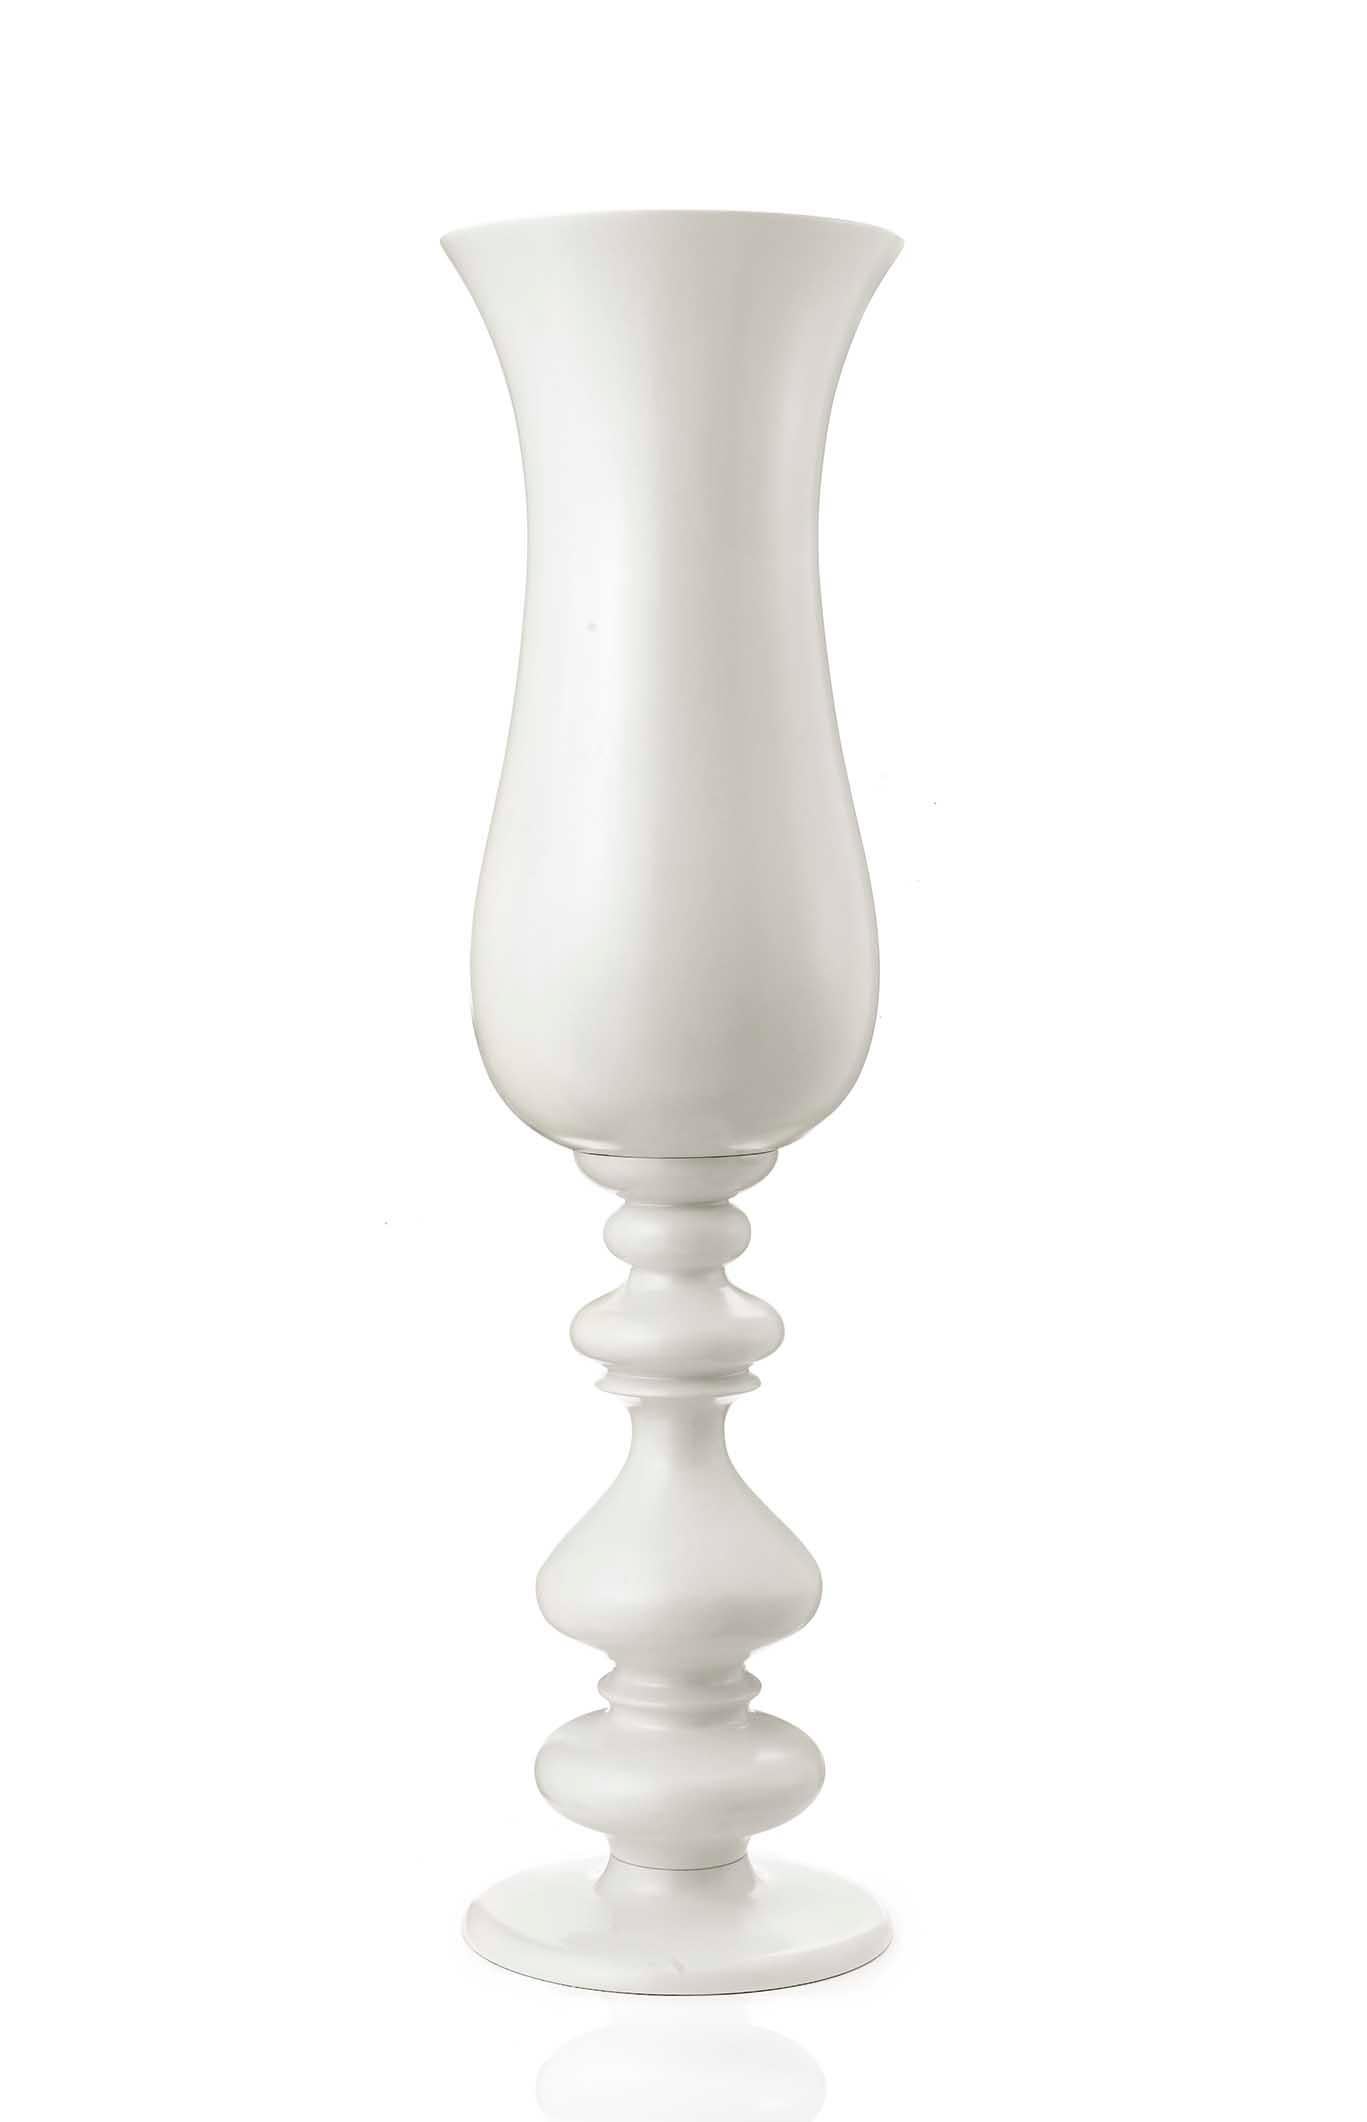 Ceramic vase LOUIS 
cod. CP300
white matte glazed 

Measures: 
H. 160.0 cm. 
Dm. 40.0 cm.